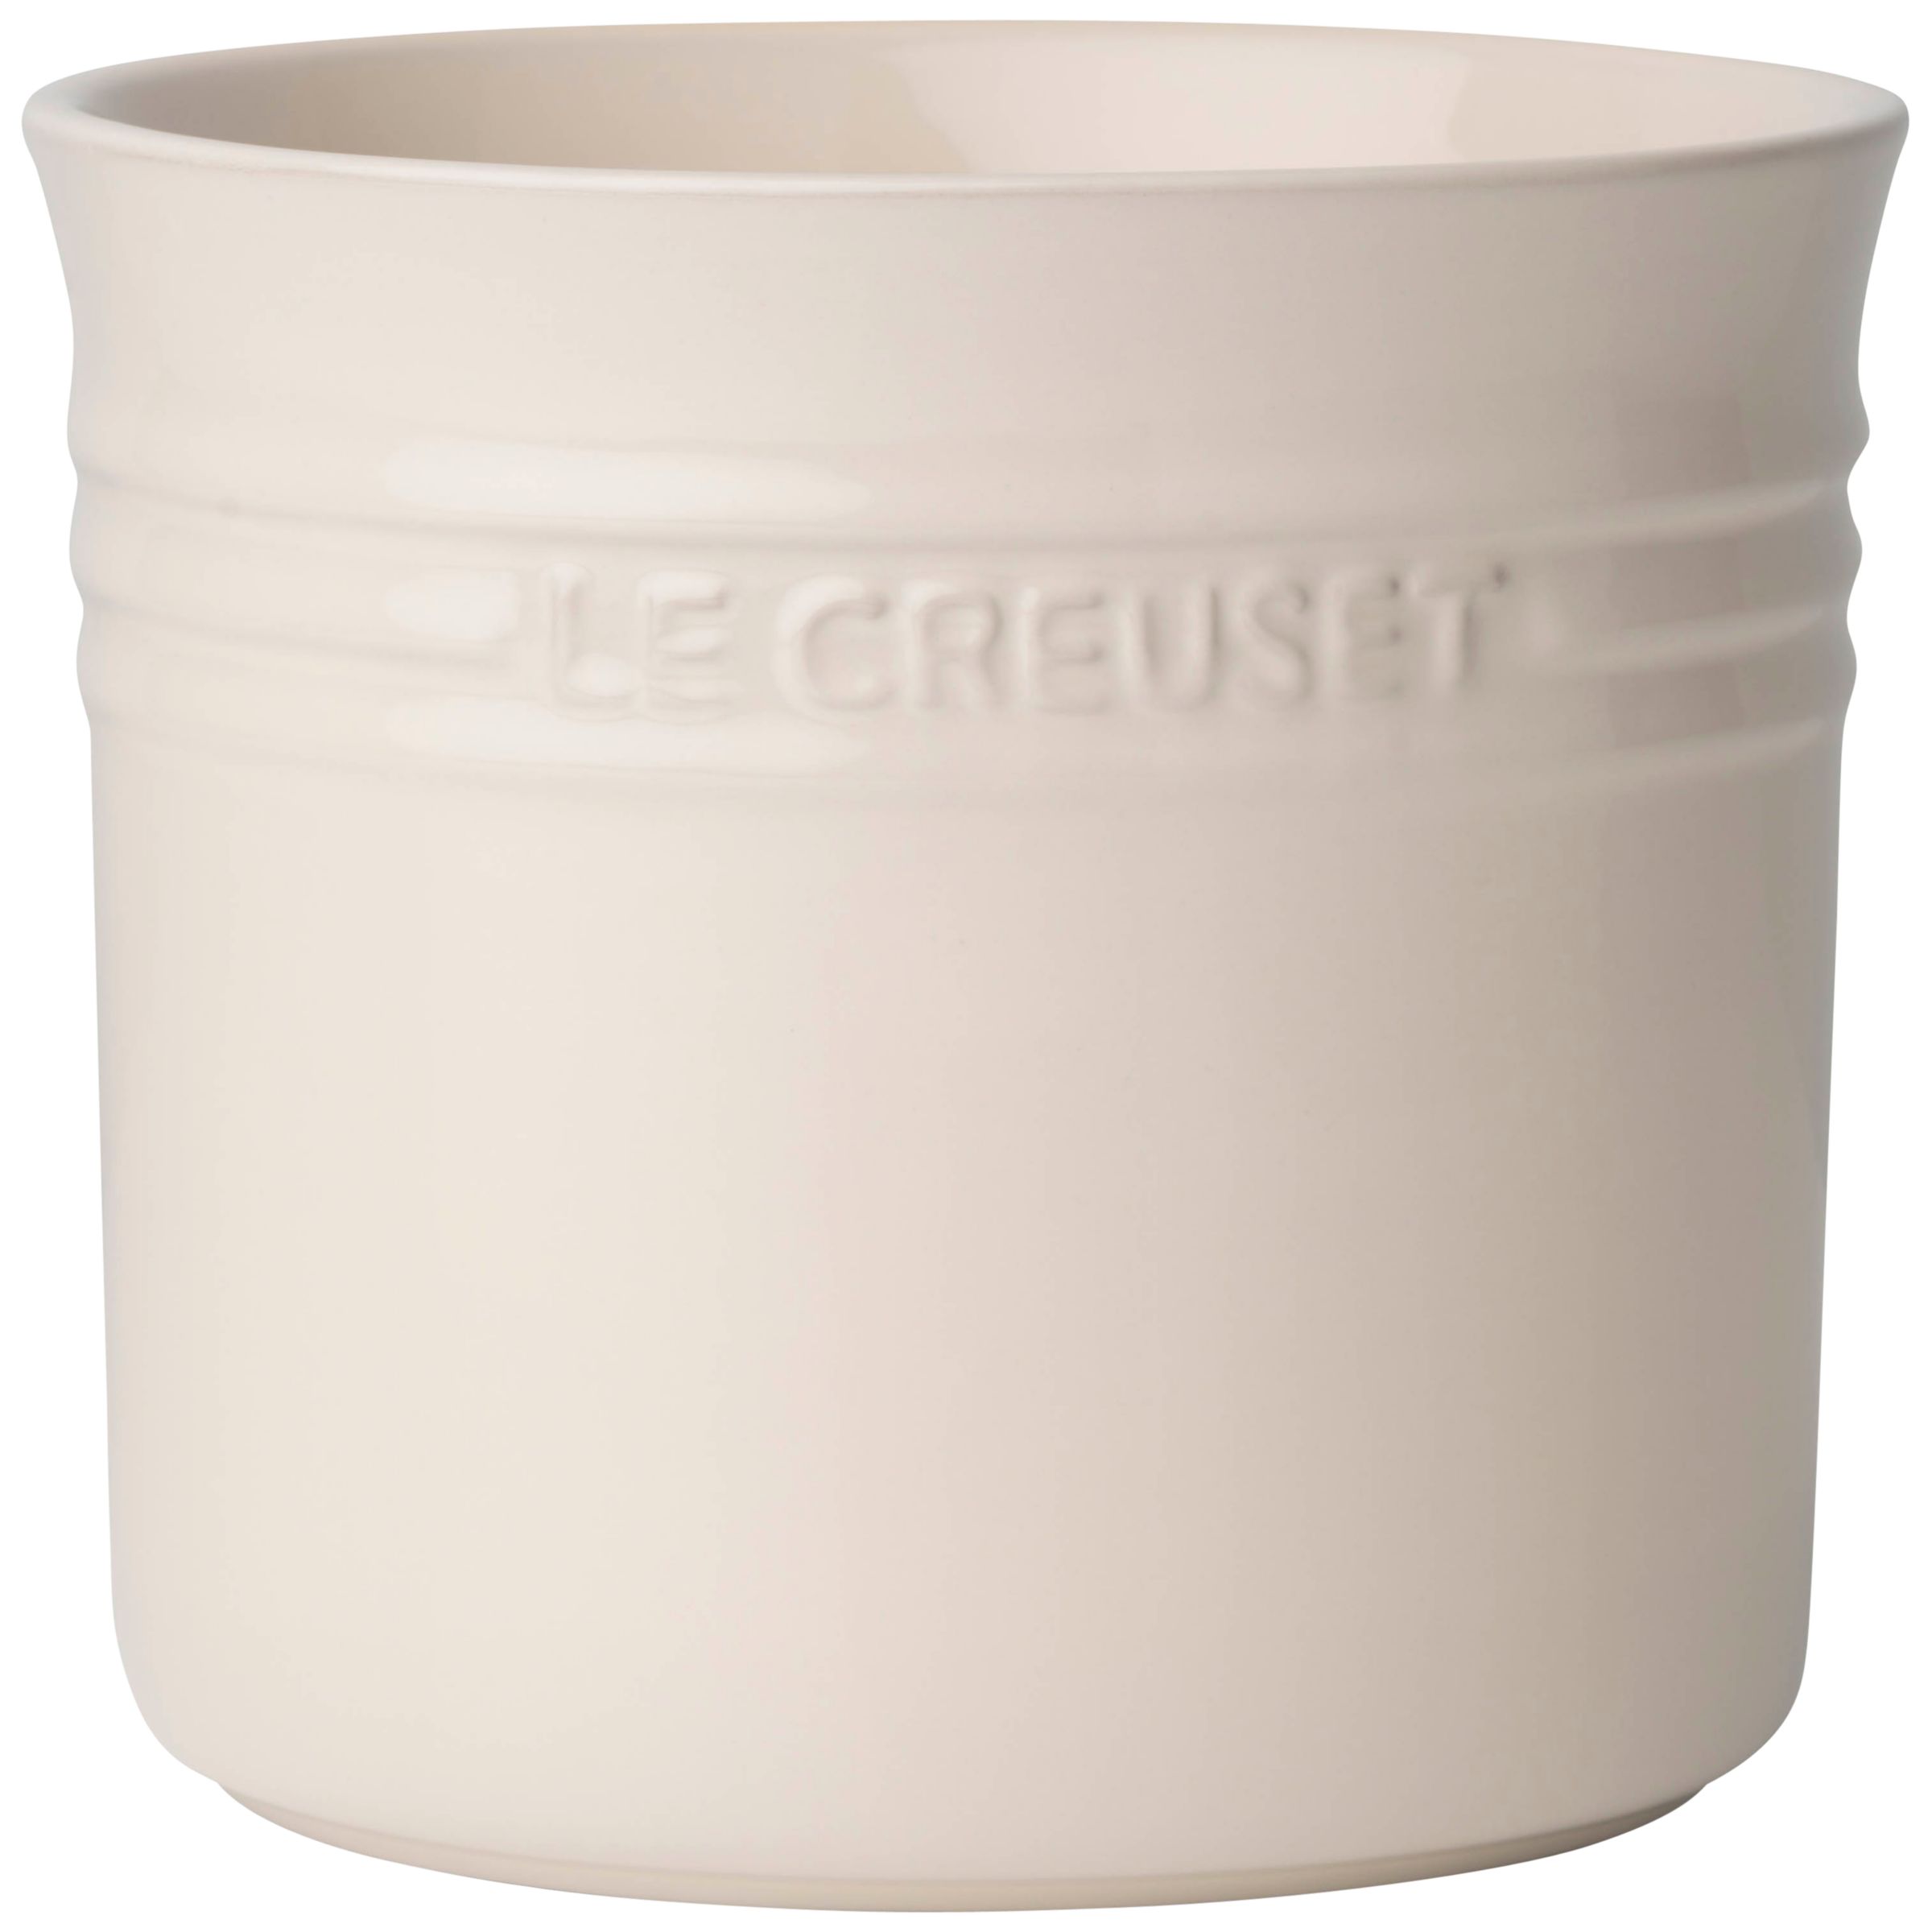 Le Creuset Stoneware Utensil Jar, Large